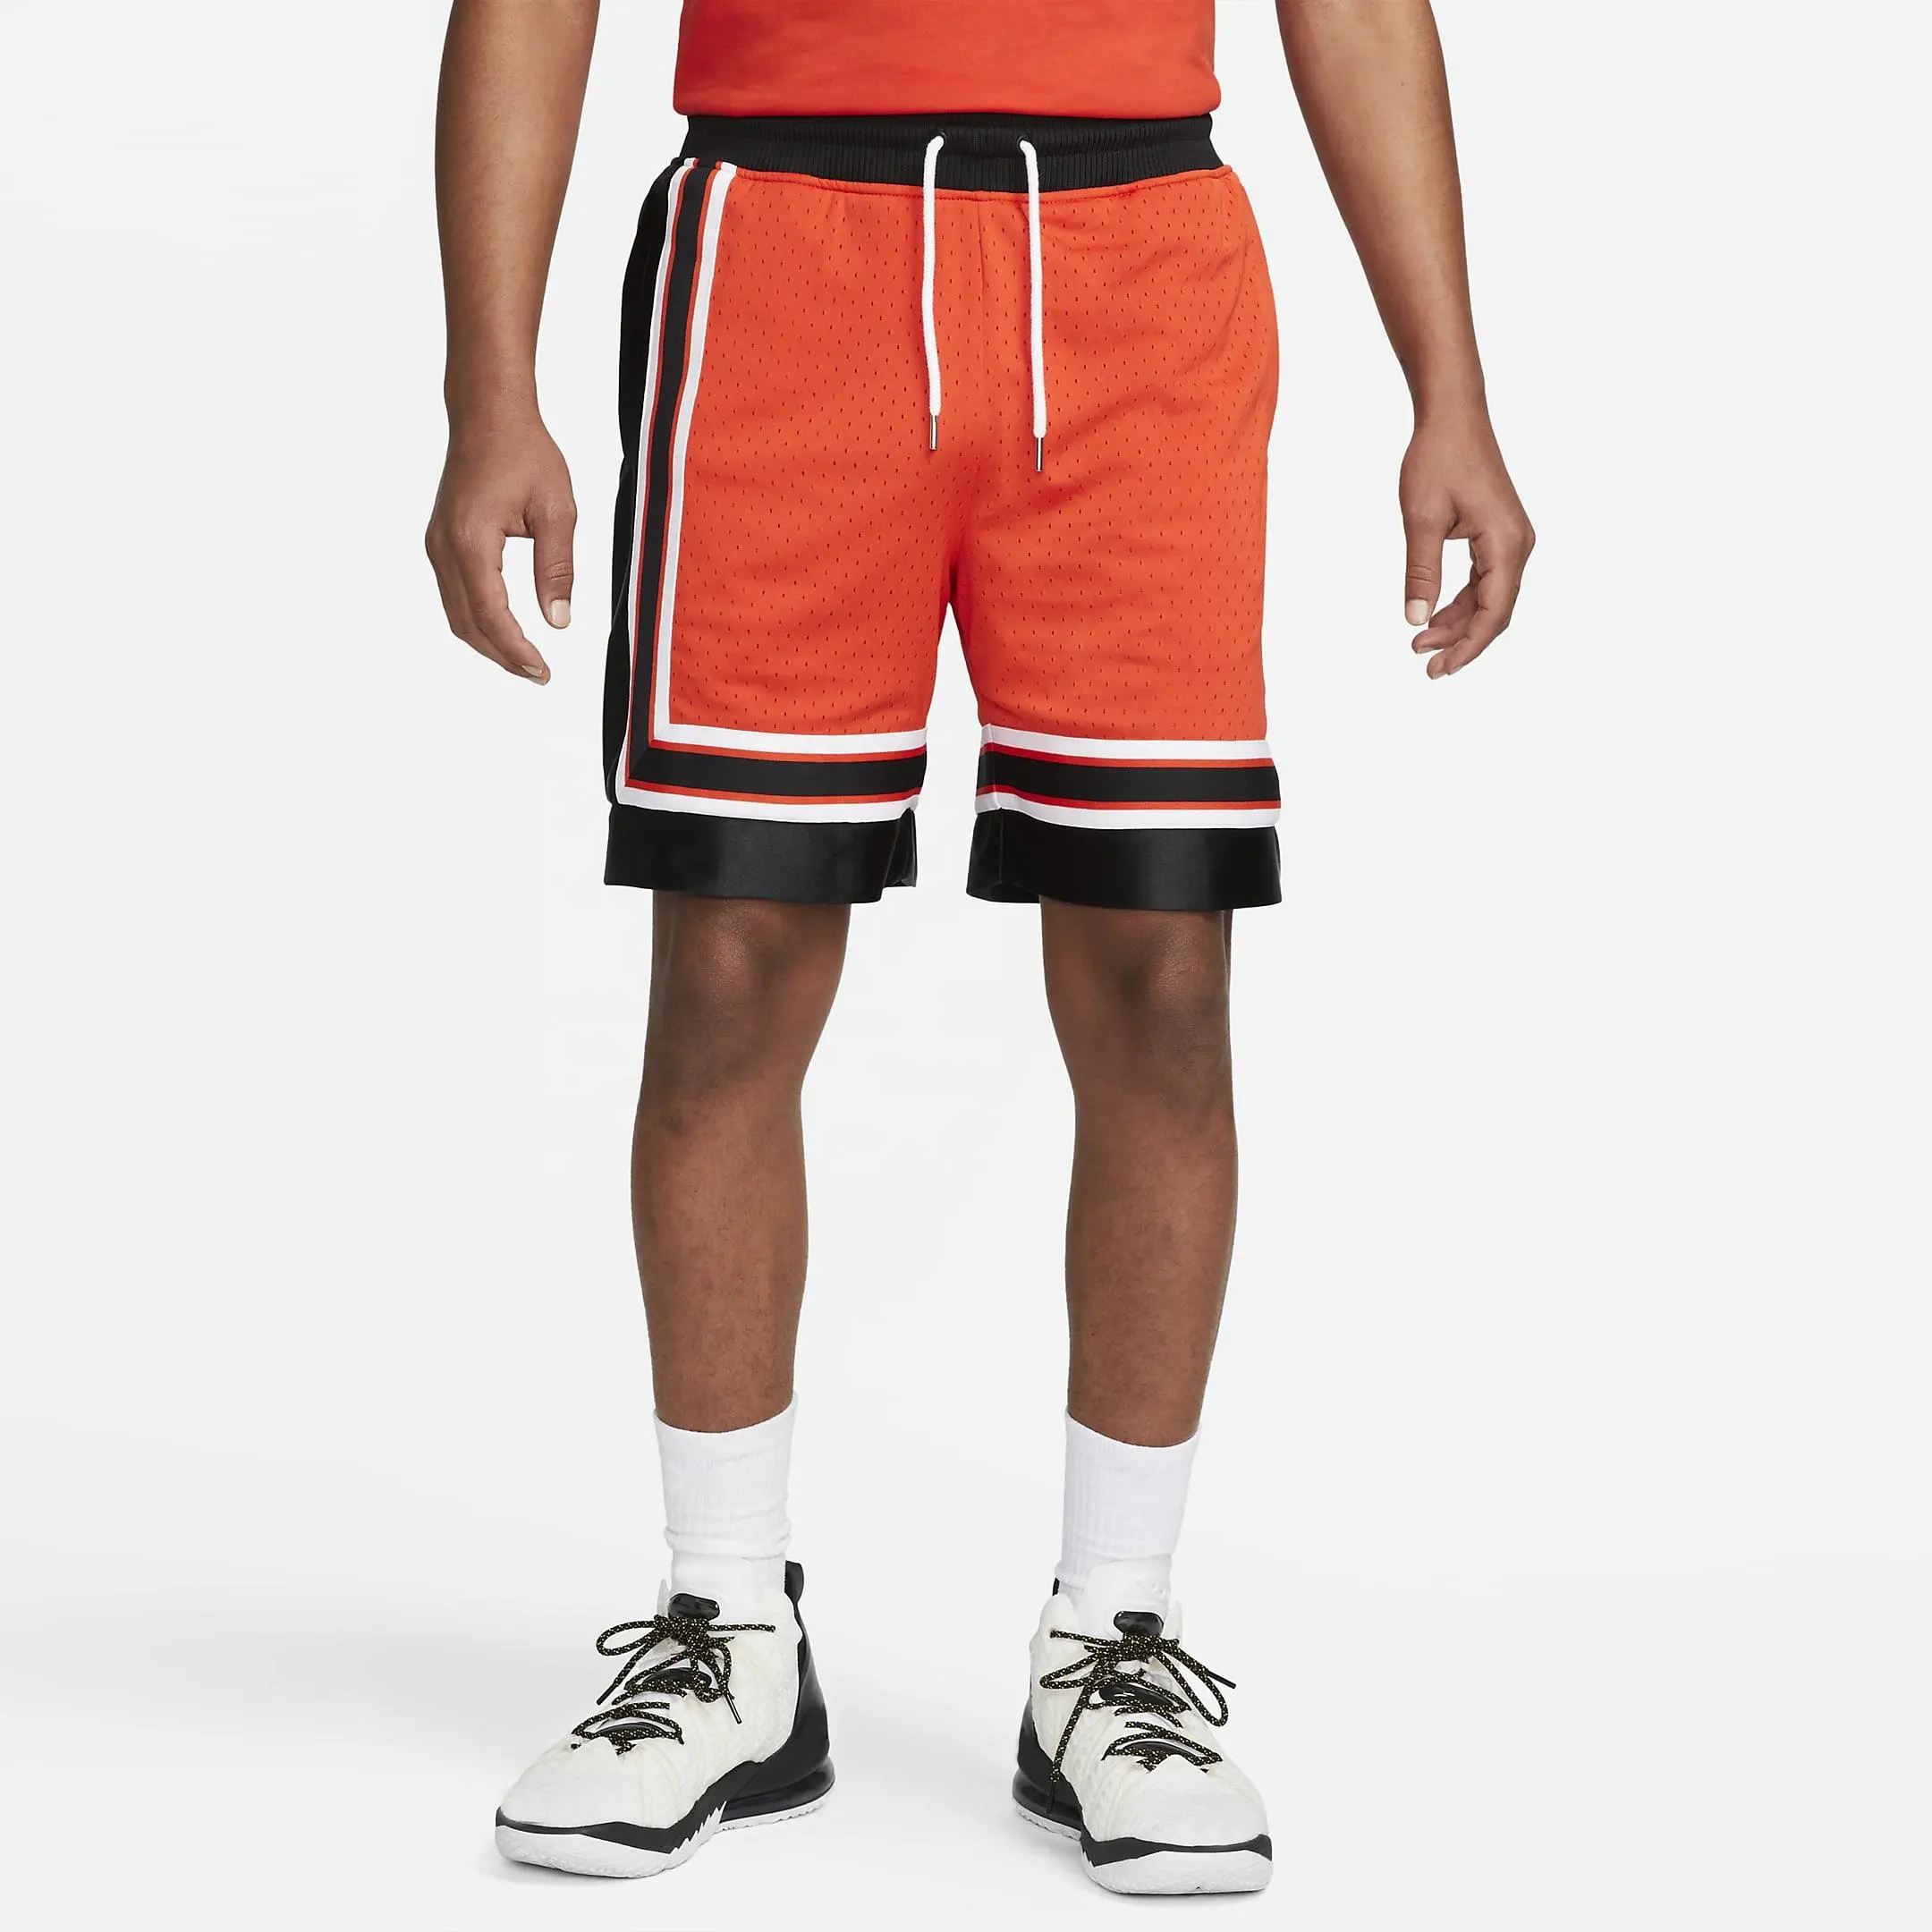 Custom Logo Polyester Gym Athletic Running Sport Fitness Beach basketball shorts with zipper pockets sweat mesh shorts men